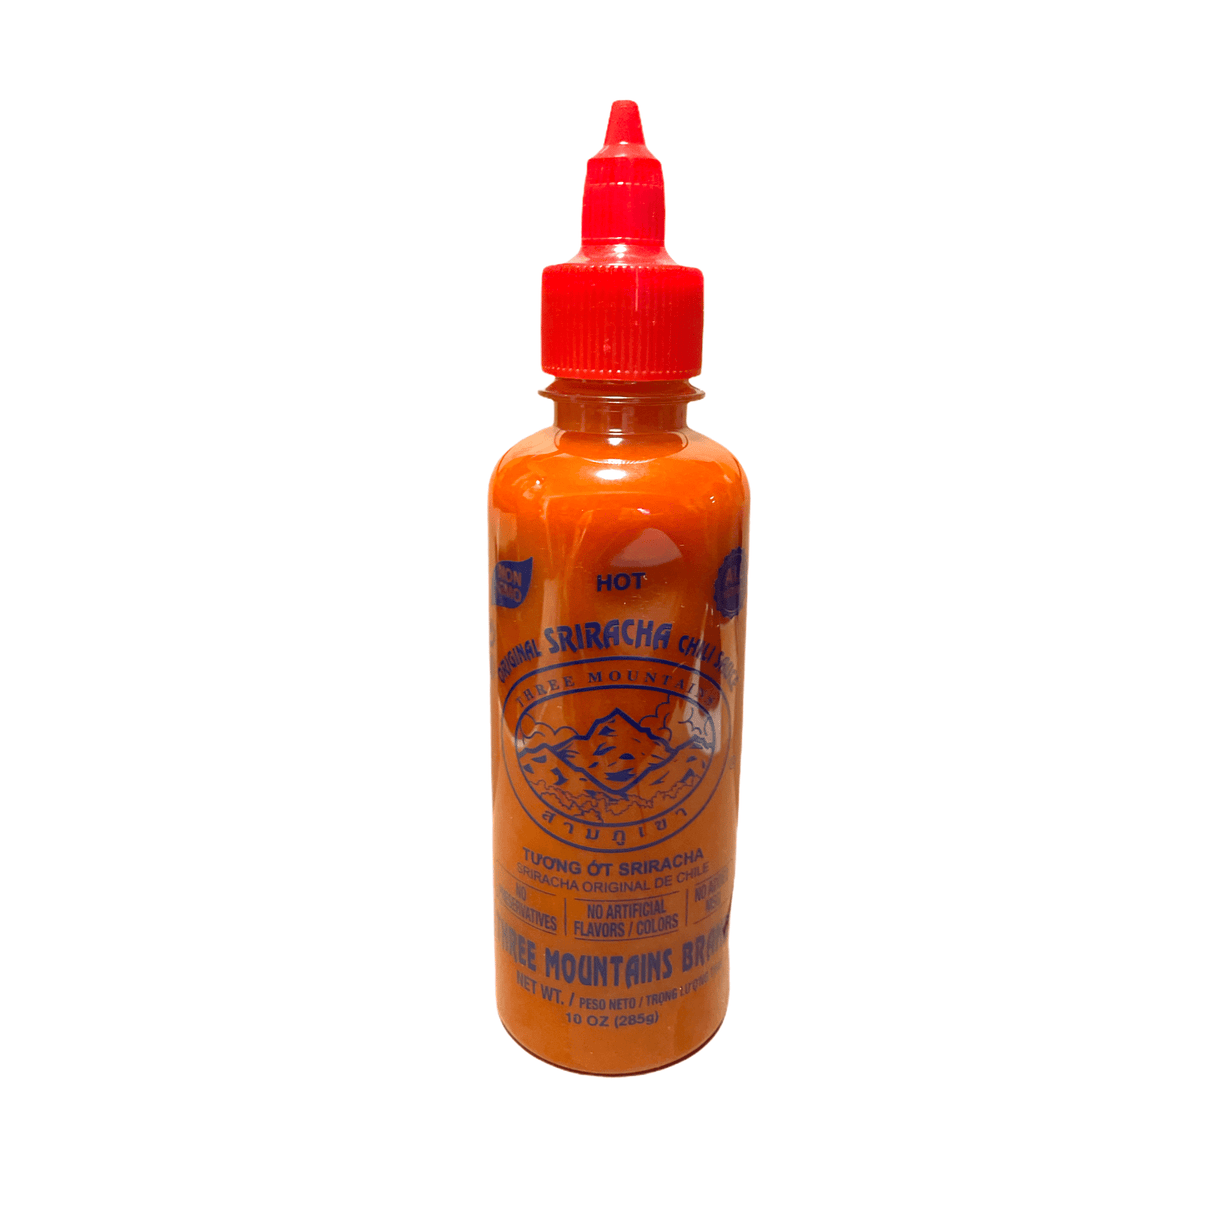 Three Mountains Original Sriracha Chili Sauce (Hot)